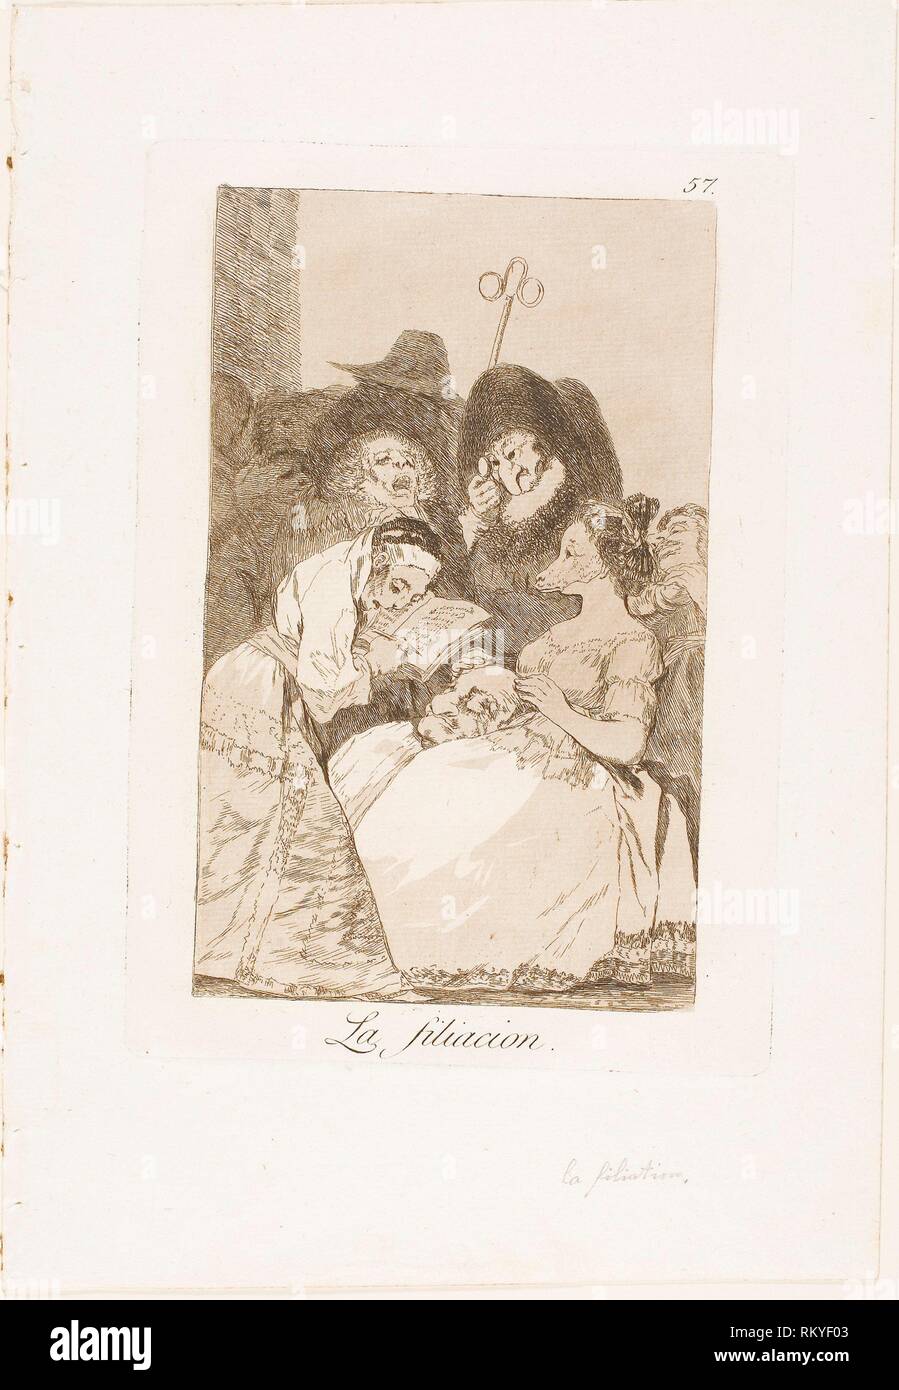 Die kindschaft, Platte 57 aus Los Caprichos - 1797/99 - Francisco José de Goya y Lucientes Spanisch, 1746-1828 - Künstler: Francisco José de Goya y Stockfoto